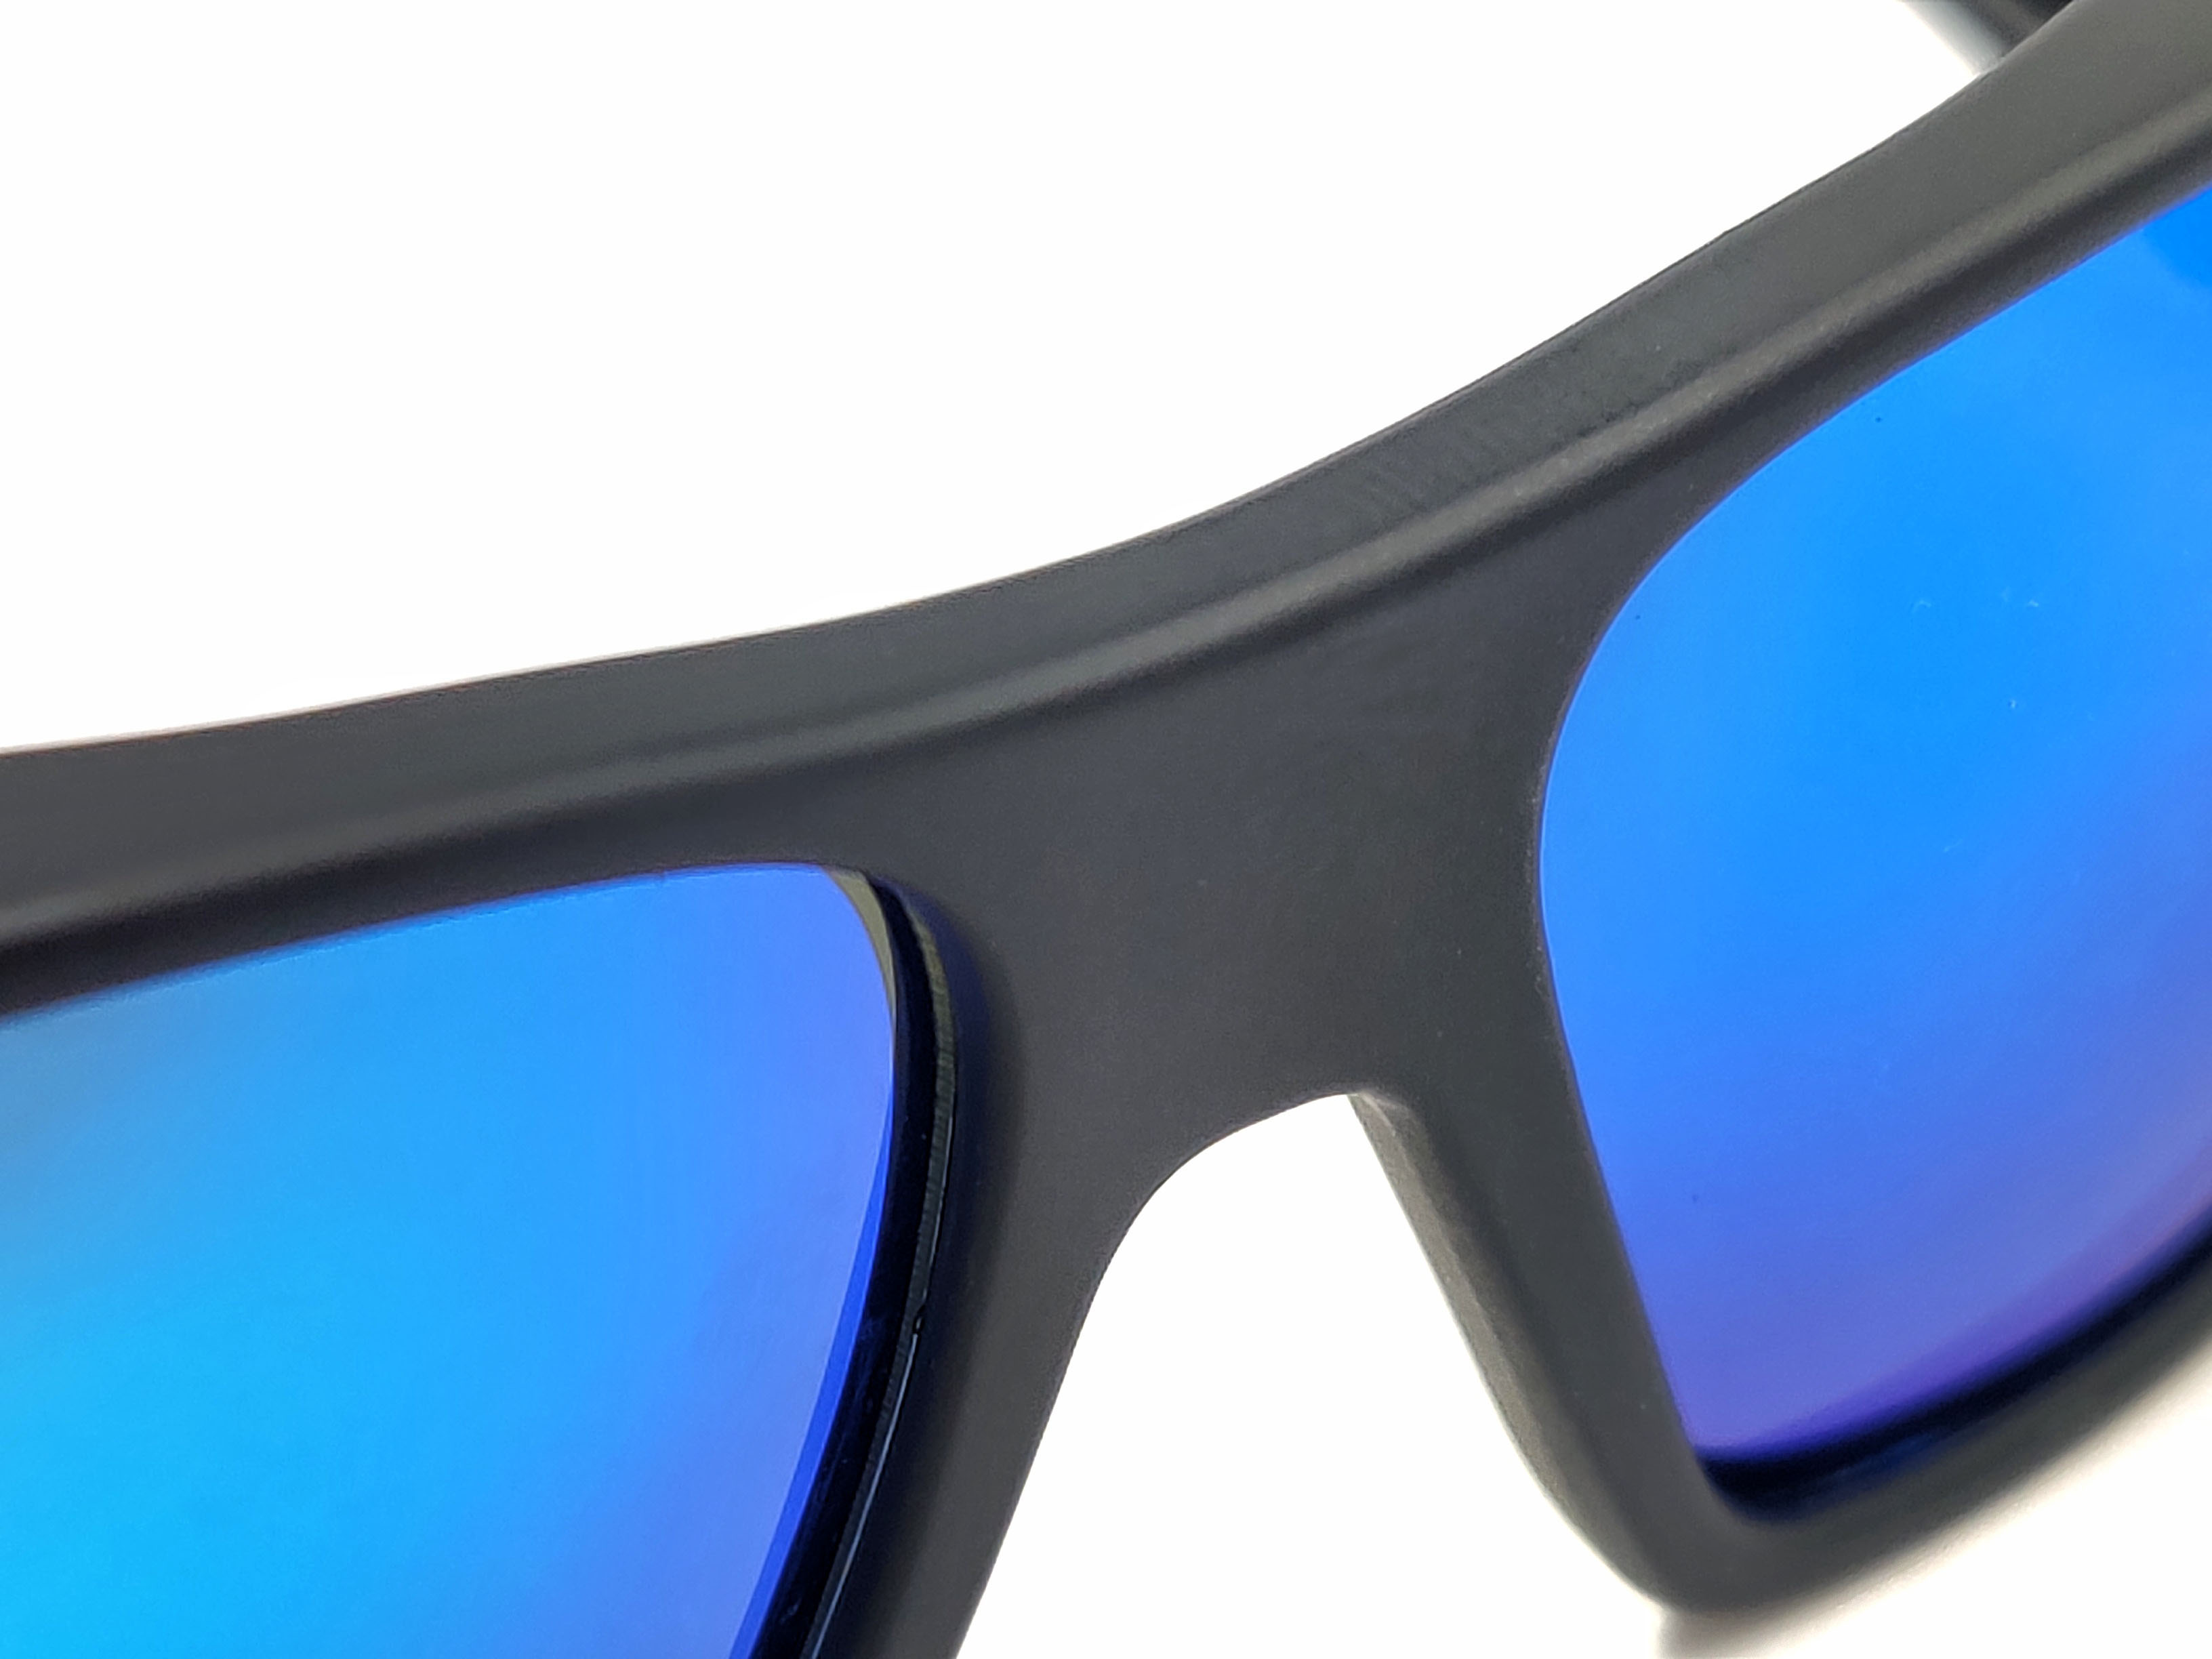 Gafas de sol Blue River Fit over Fitover Proveedores de gafas Gafas de sol Freedom Factory